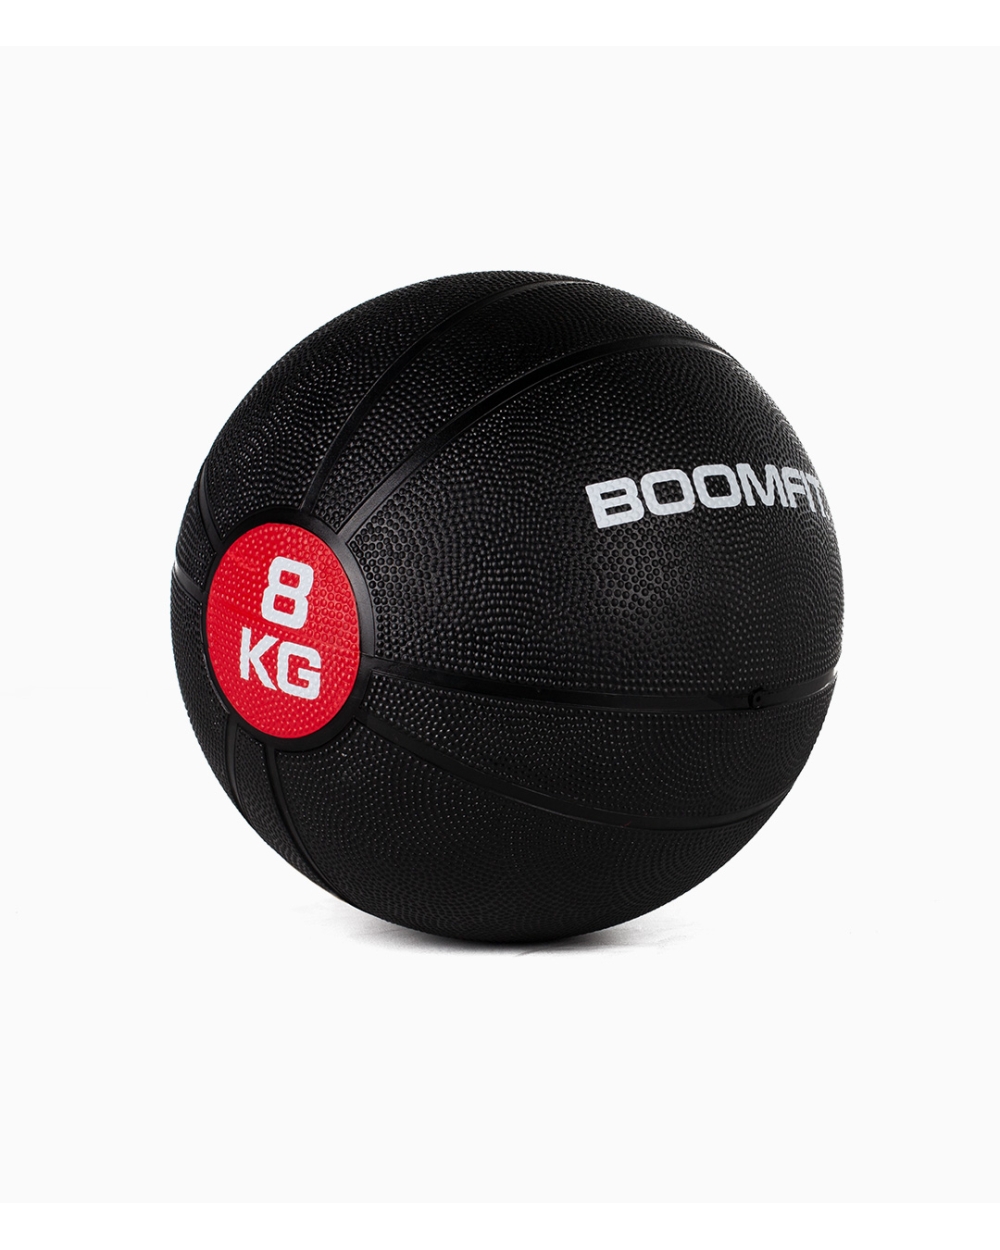 Balón Medicinal Boomfit 8kg